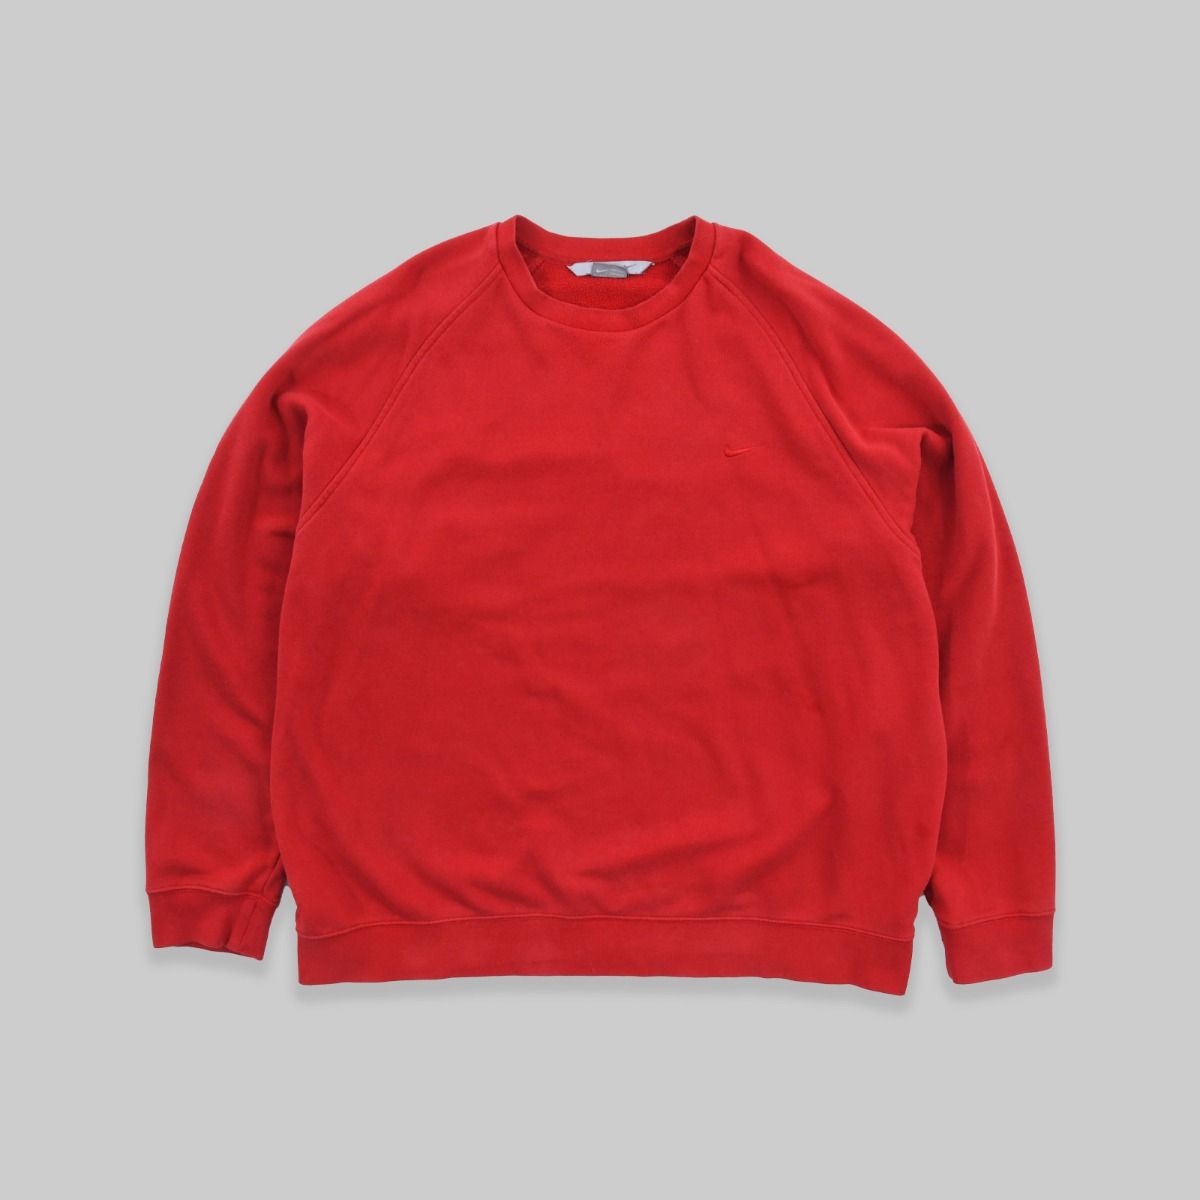 Nike Early 2000s Red Sweatshirt 